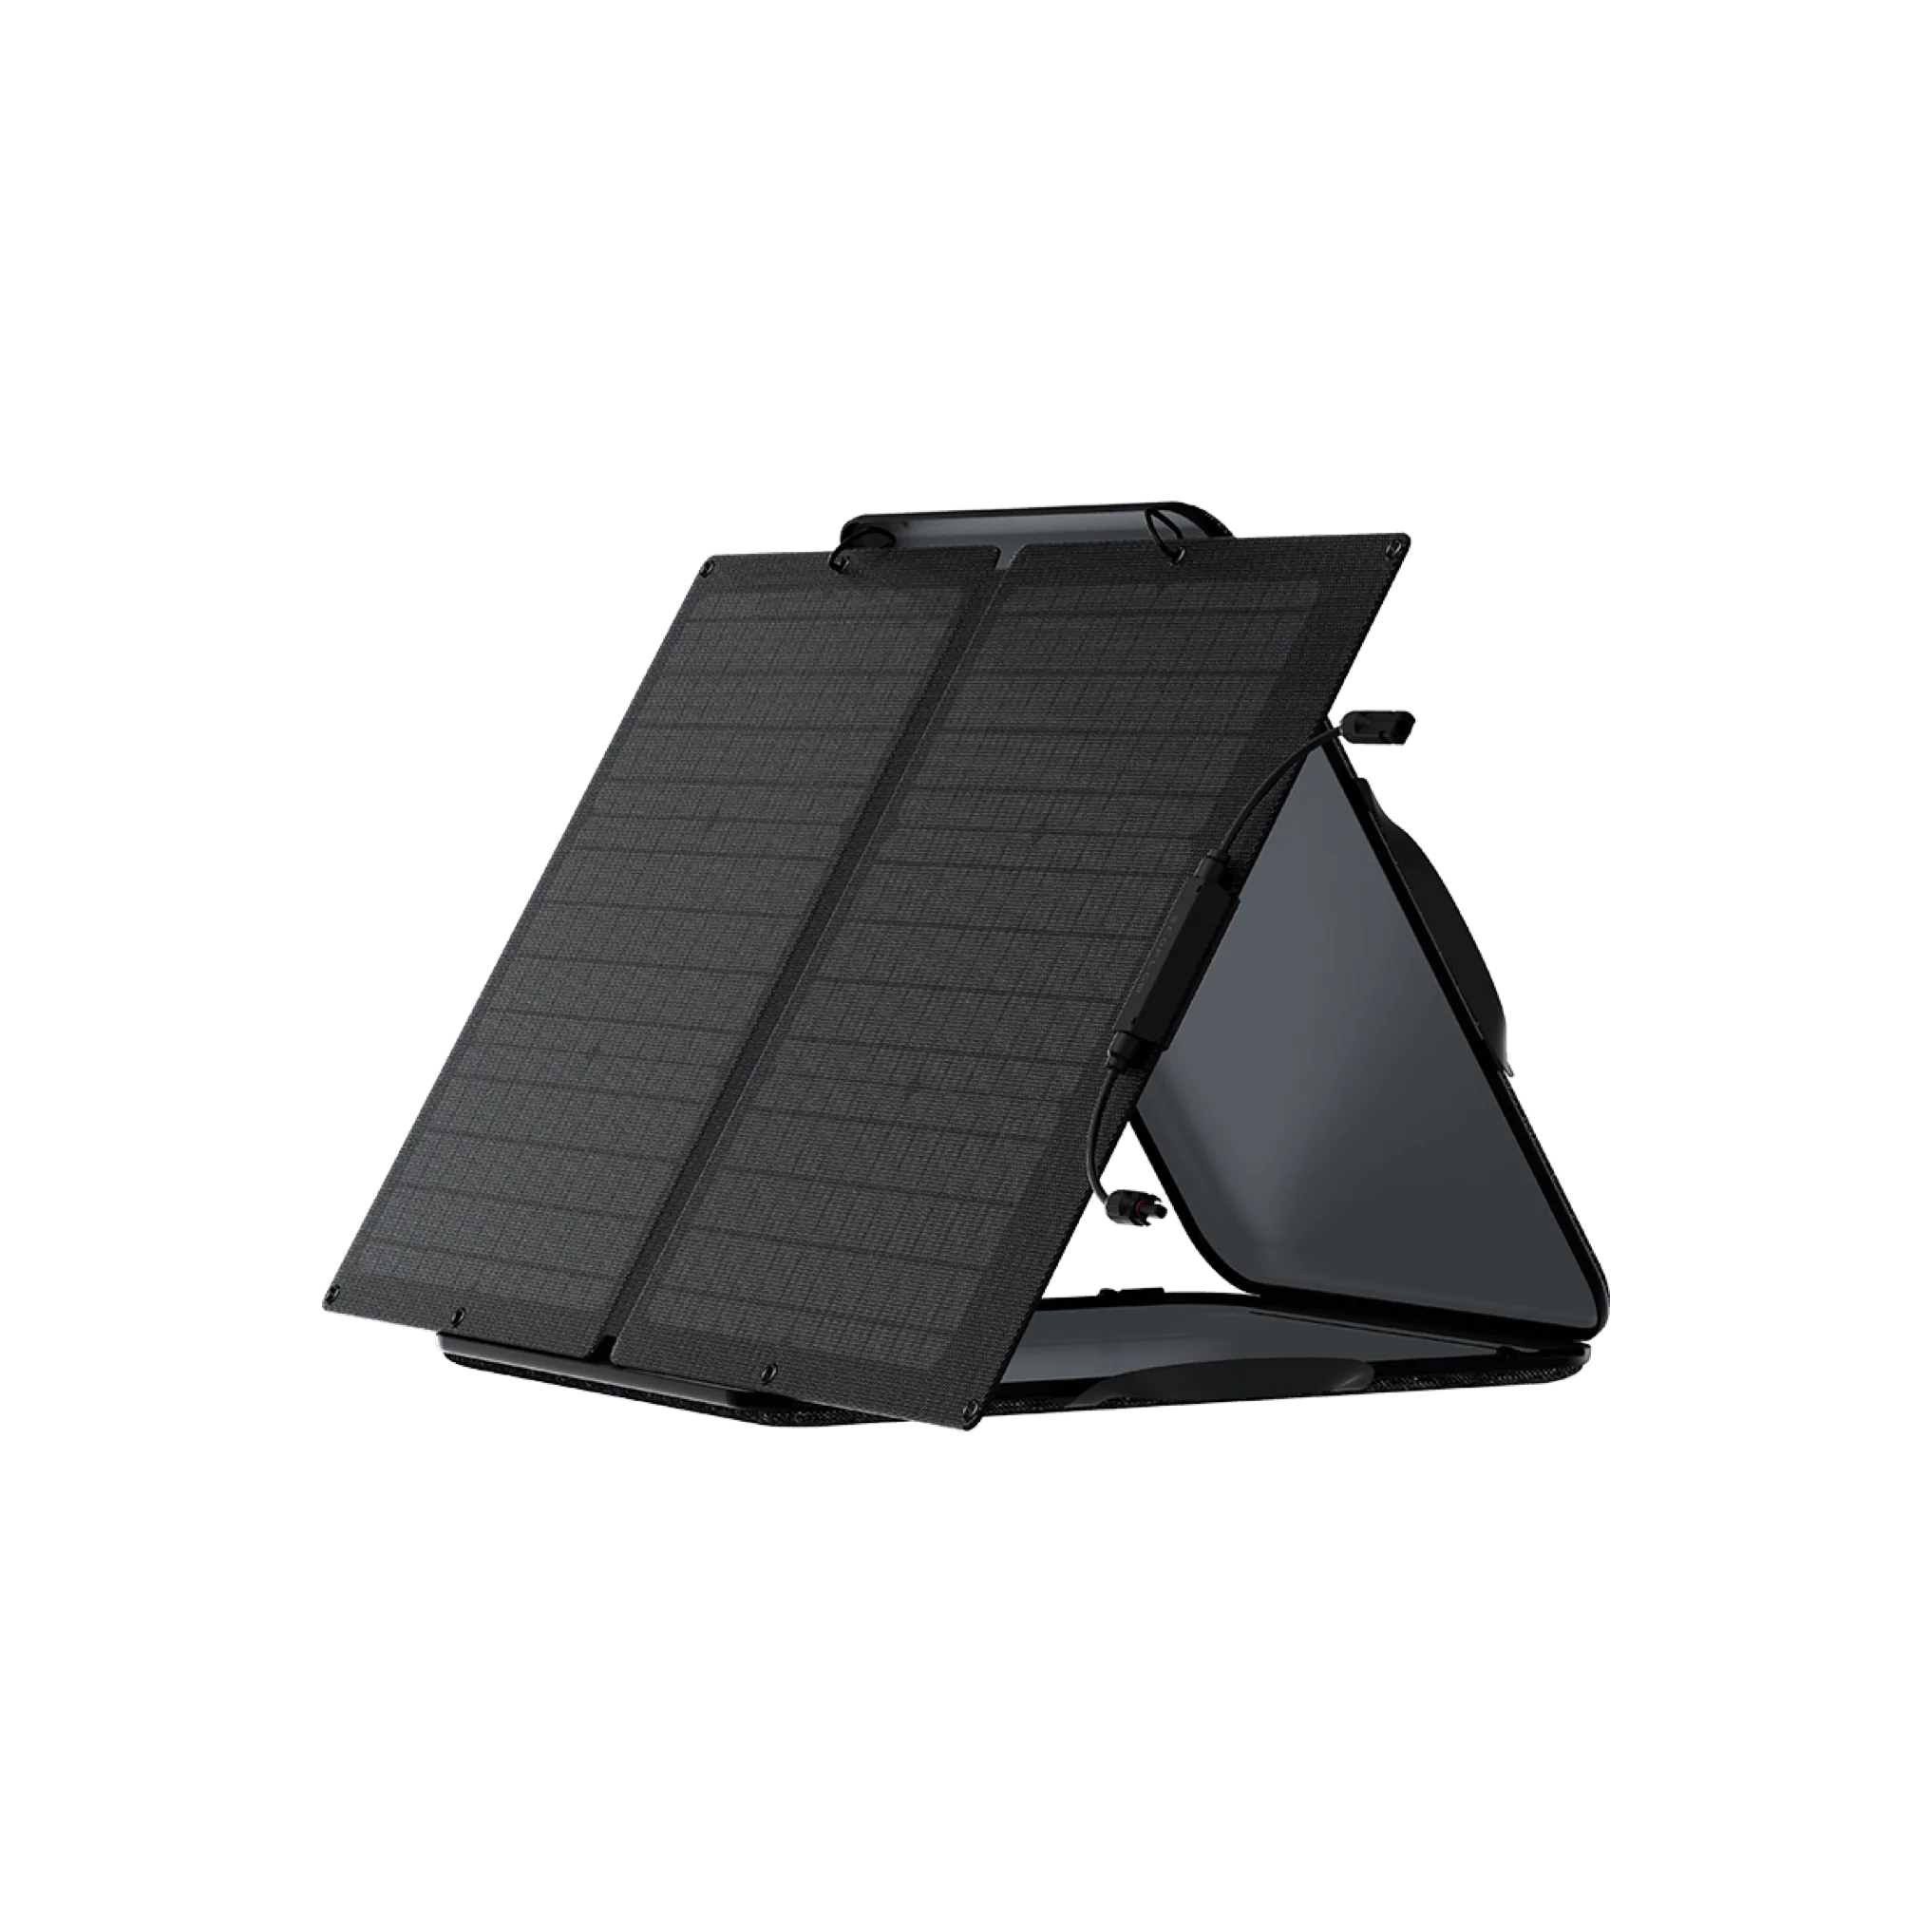 A black solar panel sitting on top of a white background, EcoFlow 60W Monocrystalline.